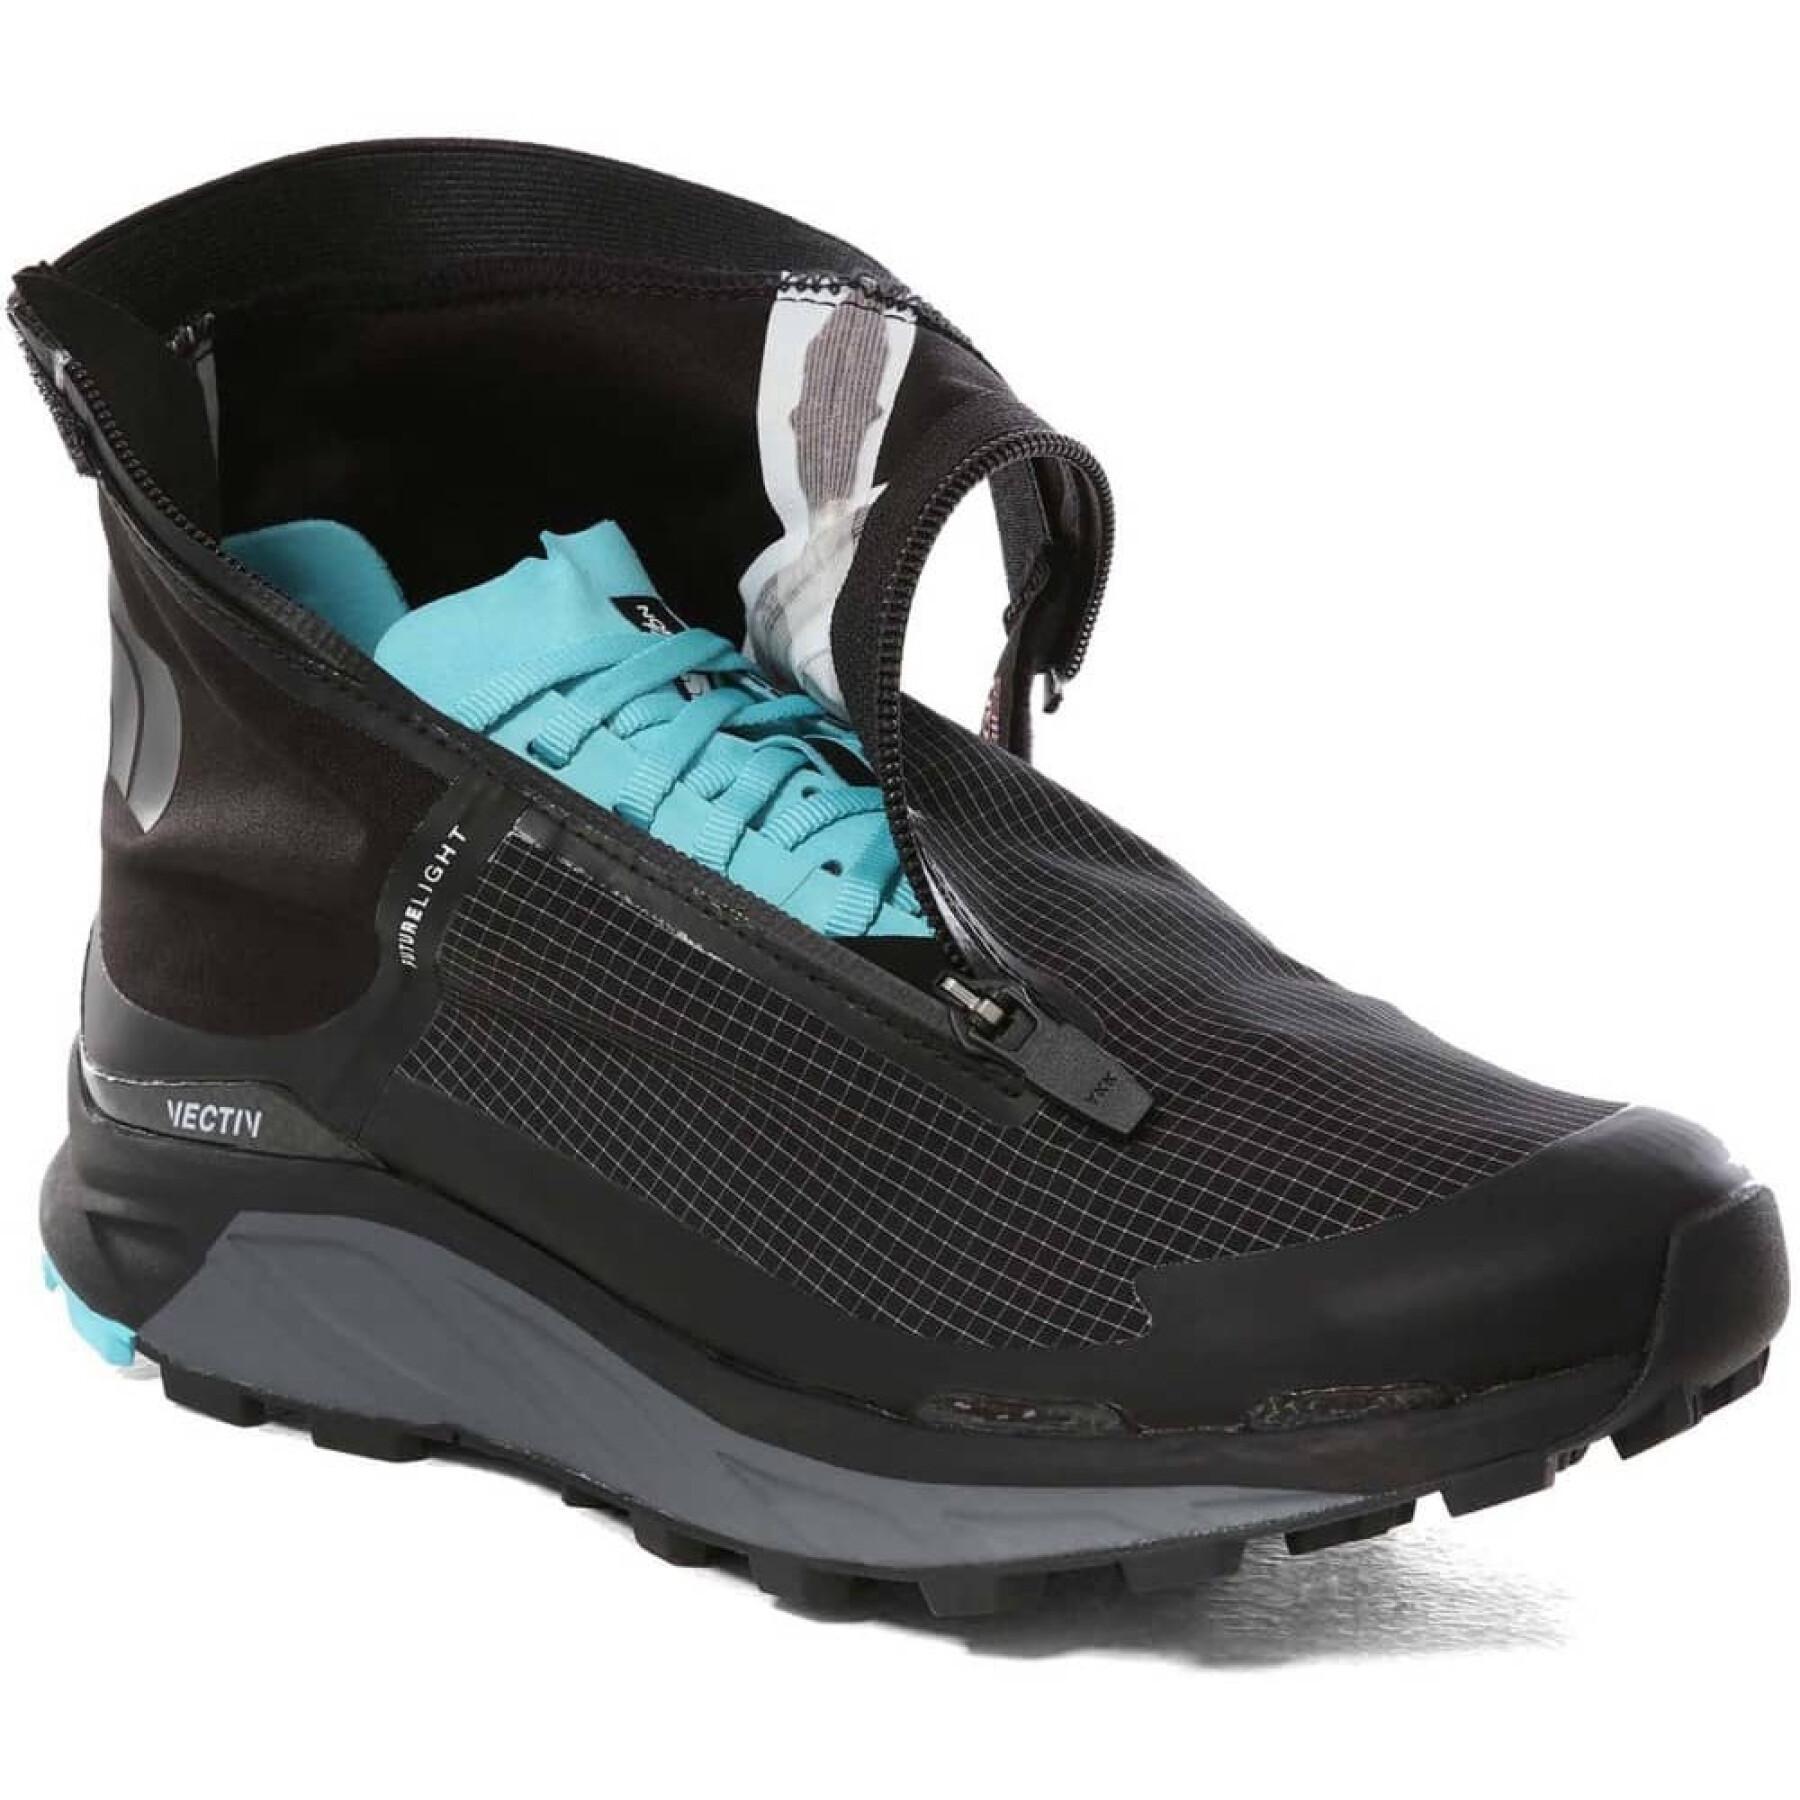 Women's Trail running shoes The North Face Flight vectiv guard futureLight™